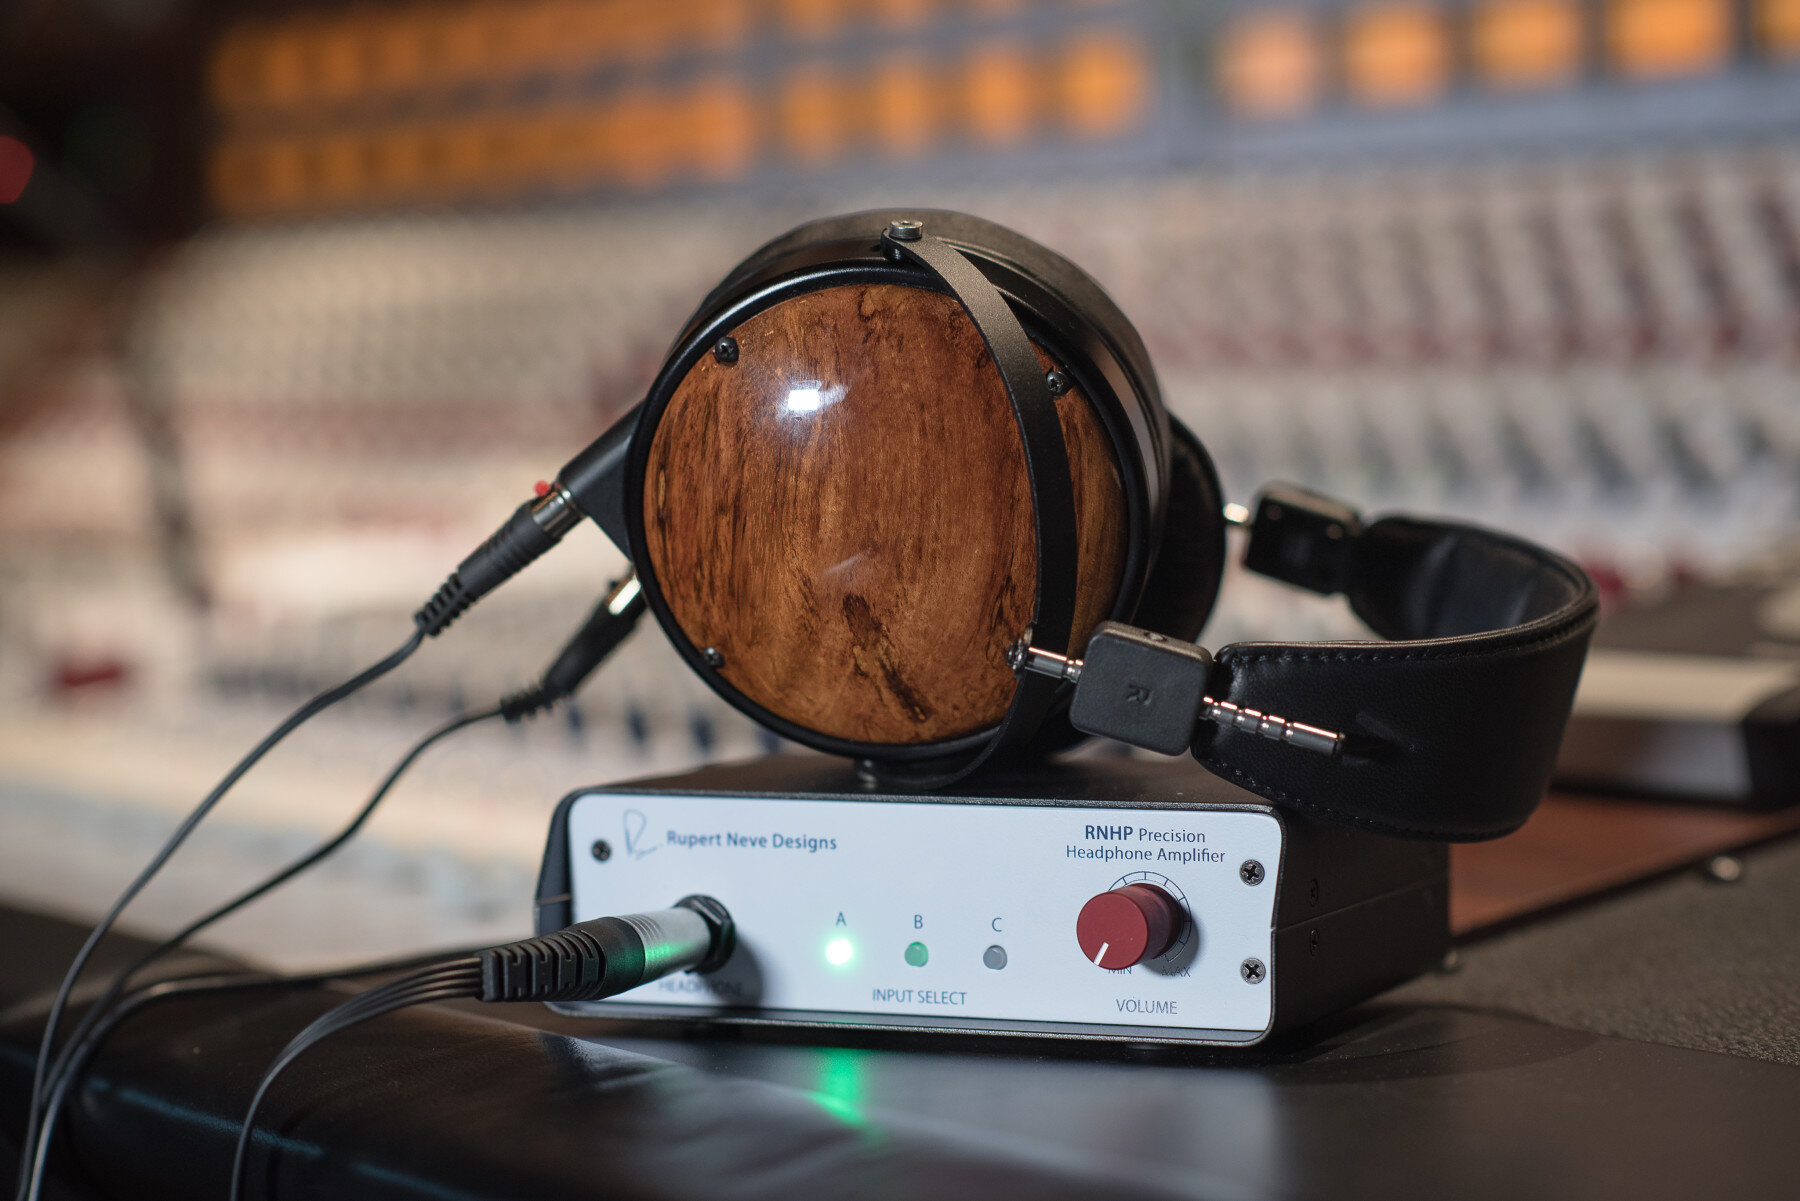 The RNHP Precision Headphone Amplifier — Rupert Neve Designs